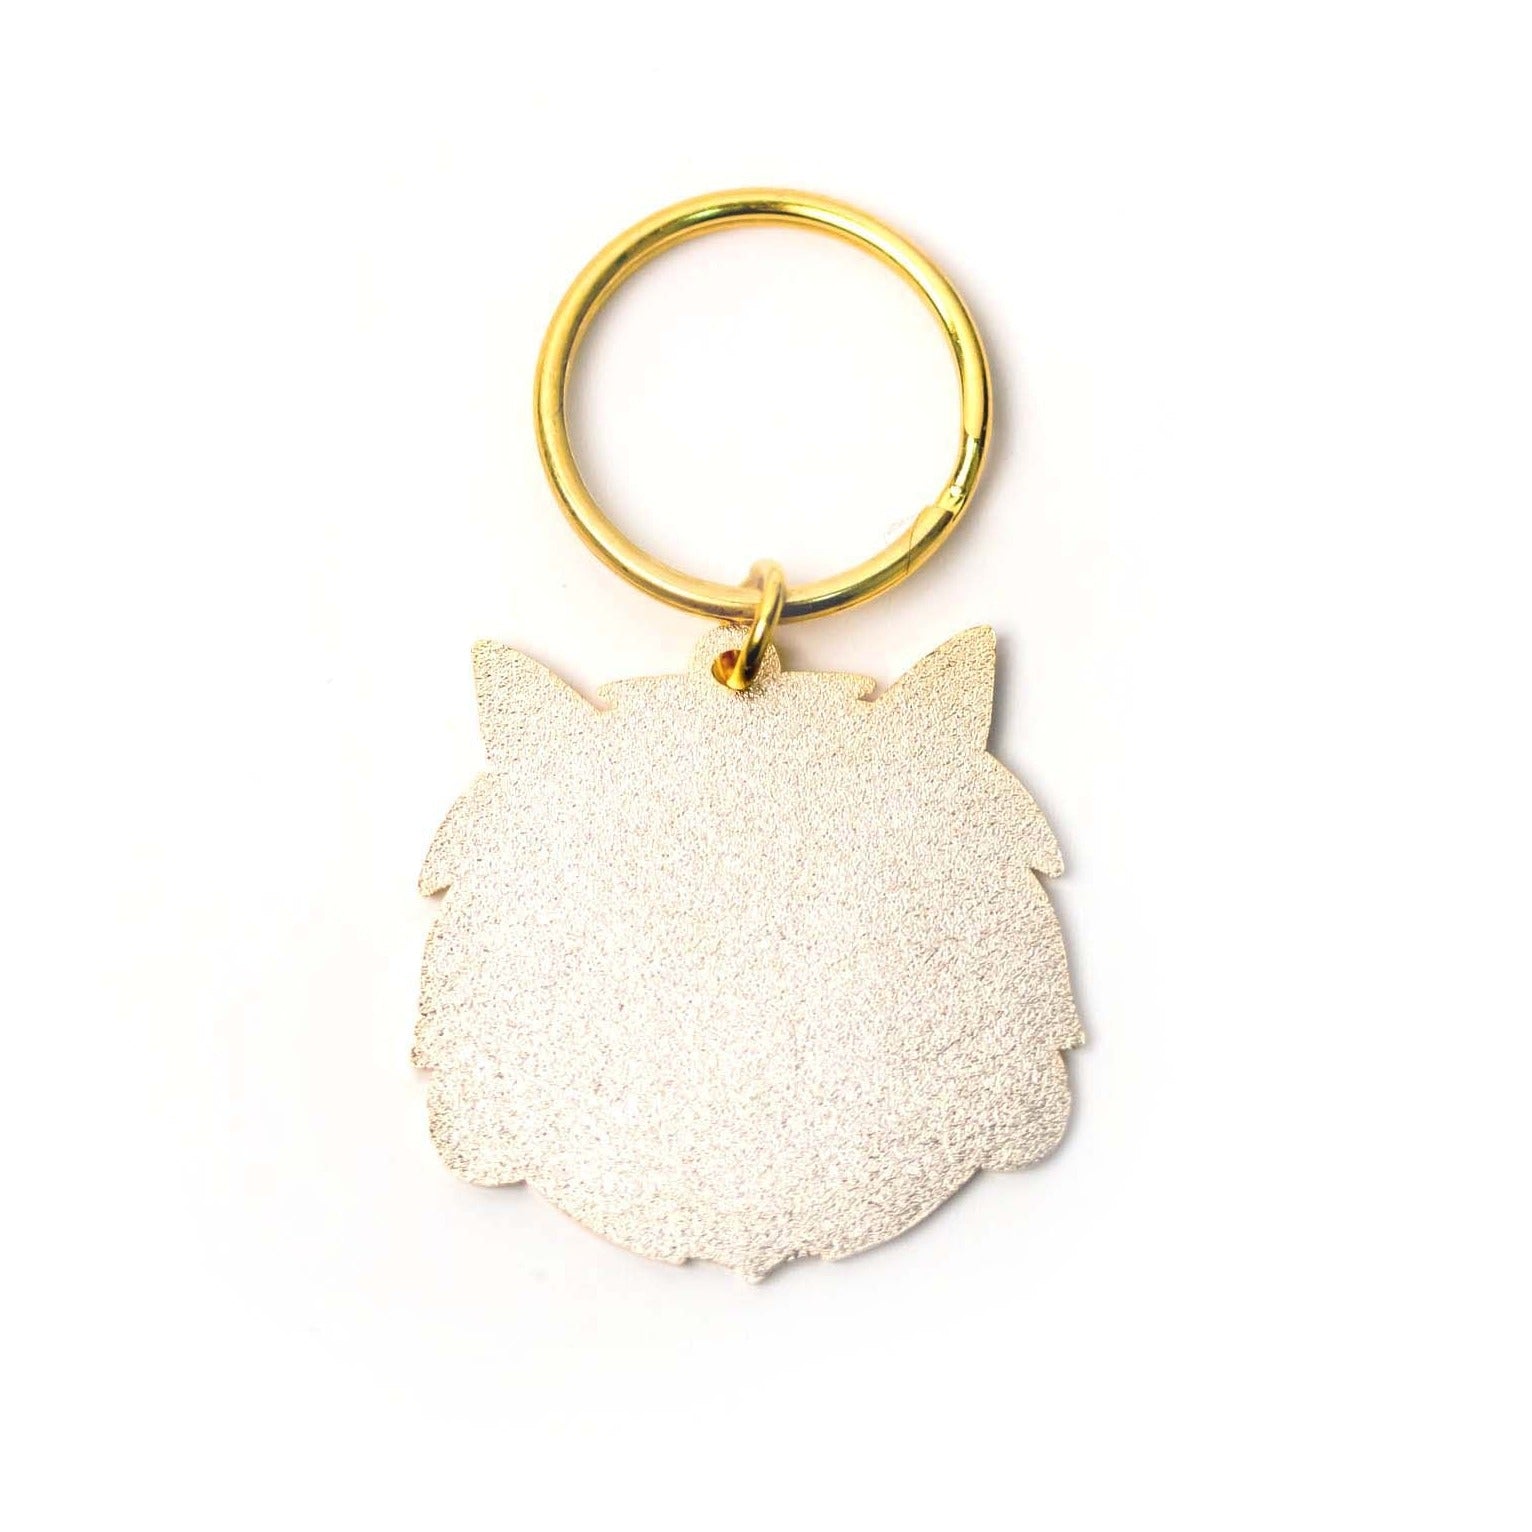 CatBisque Gold Poop Golden Poo Charm Handmade Kawaii Keychain